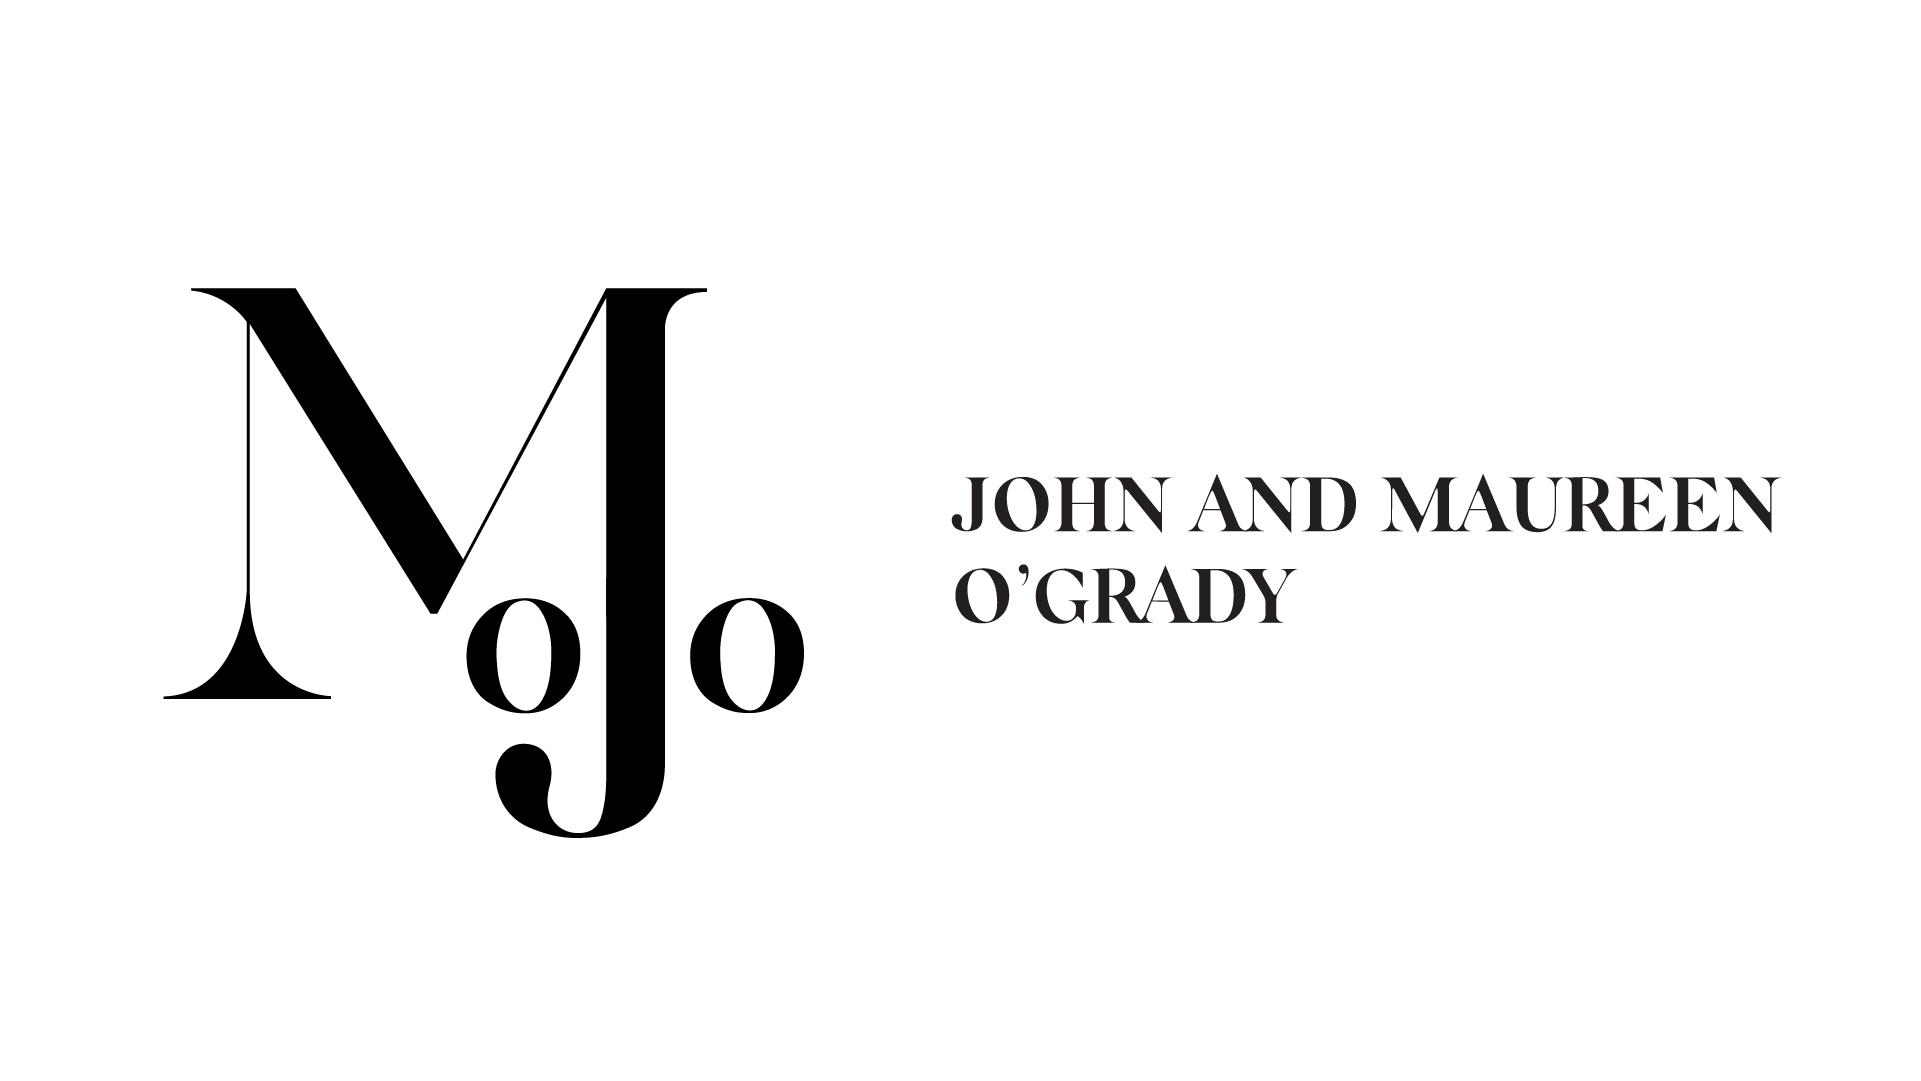 A text banner reading JOHN AND MAUREEN